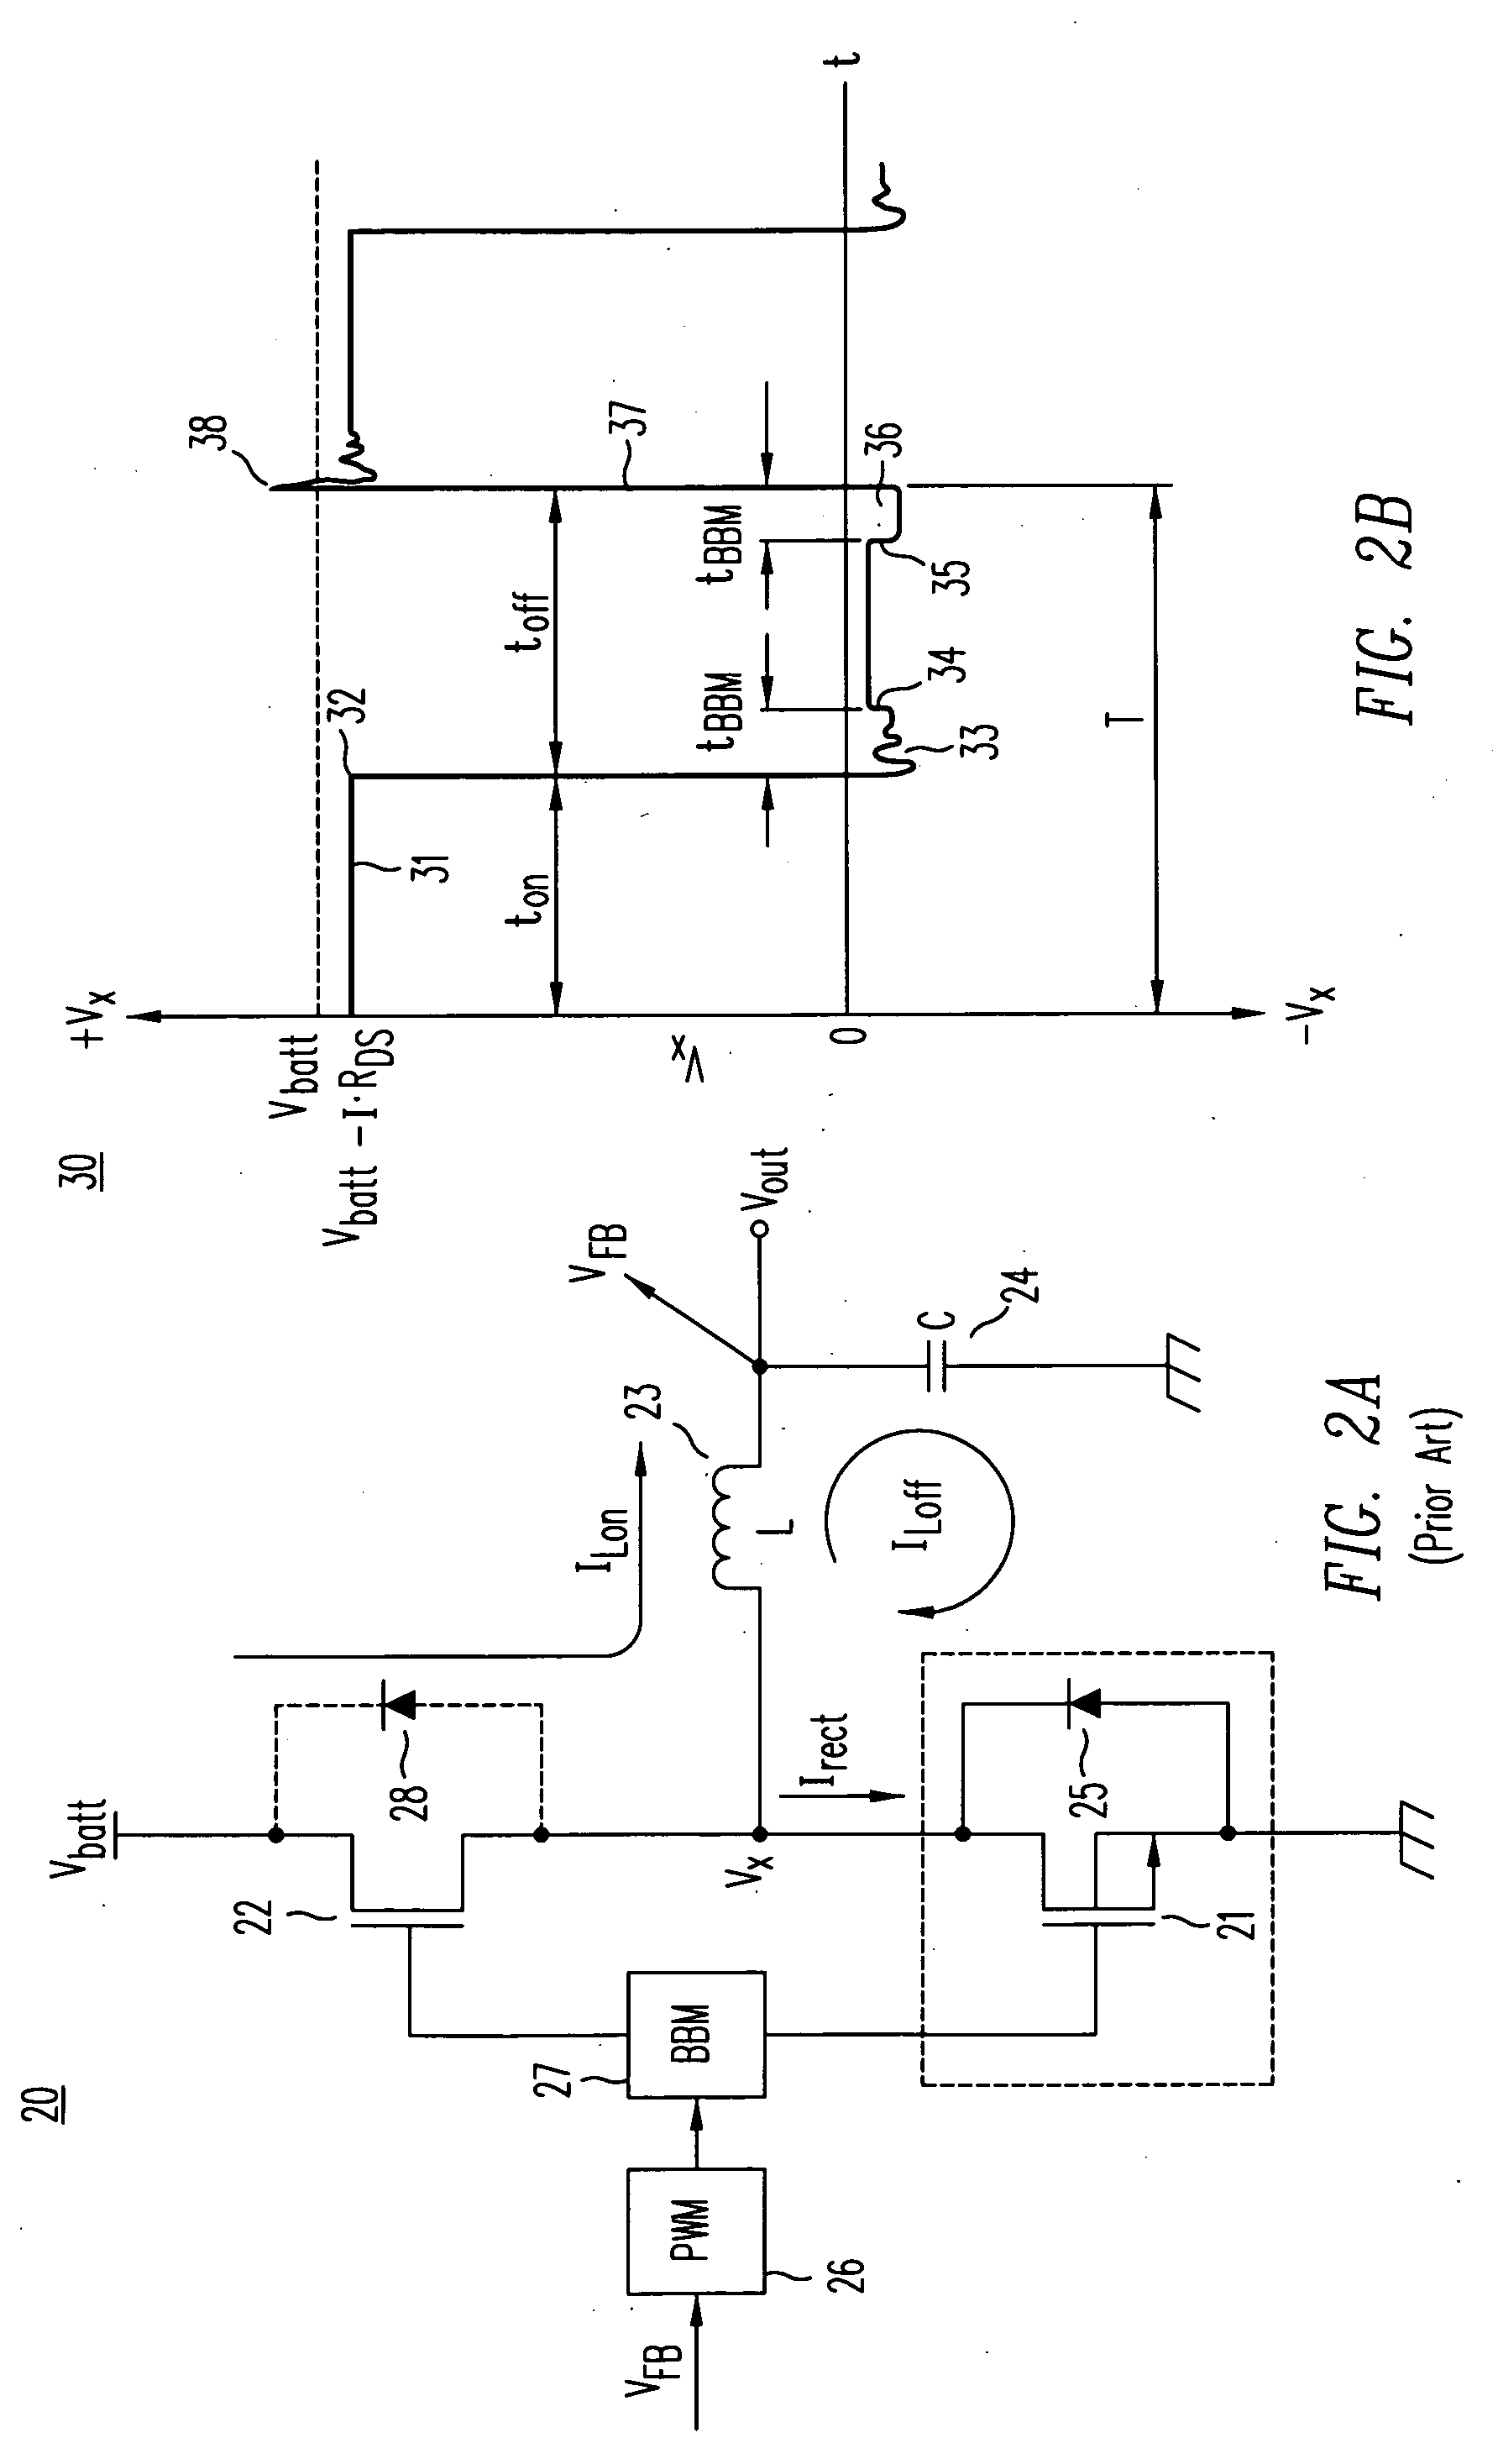 Step-down switching regulator with freewheeling diode